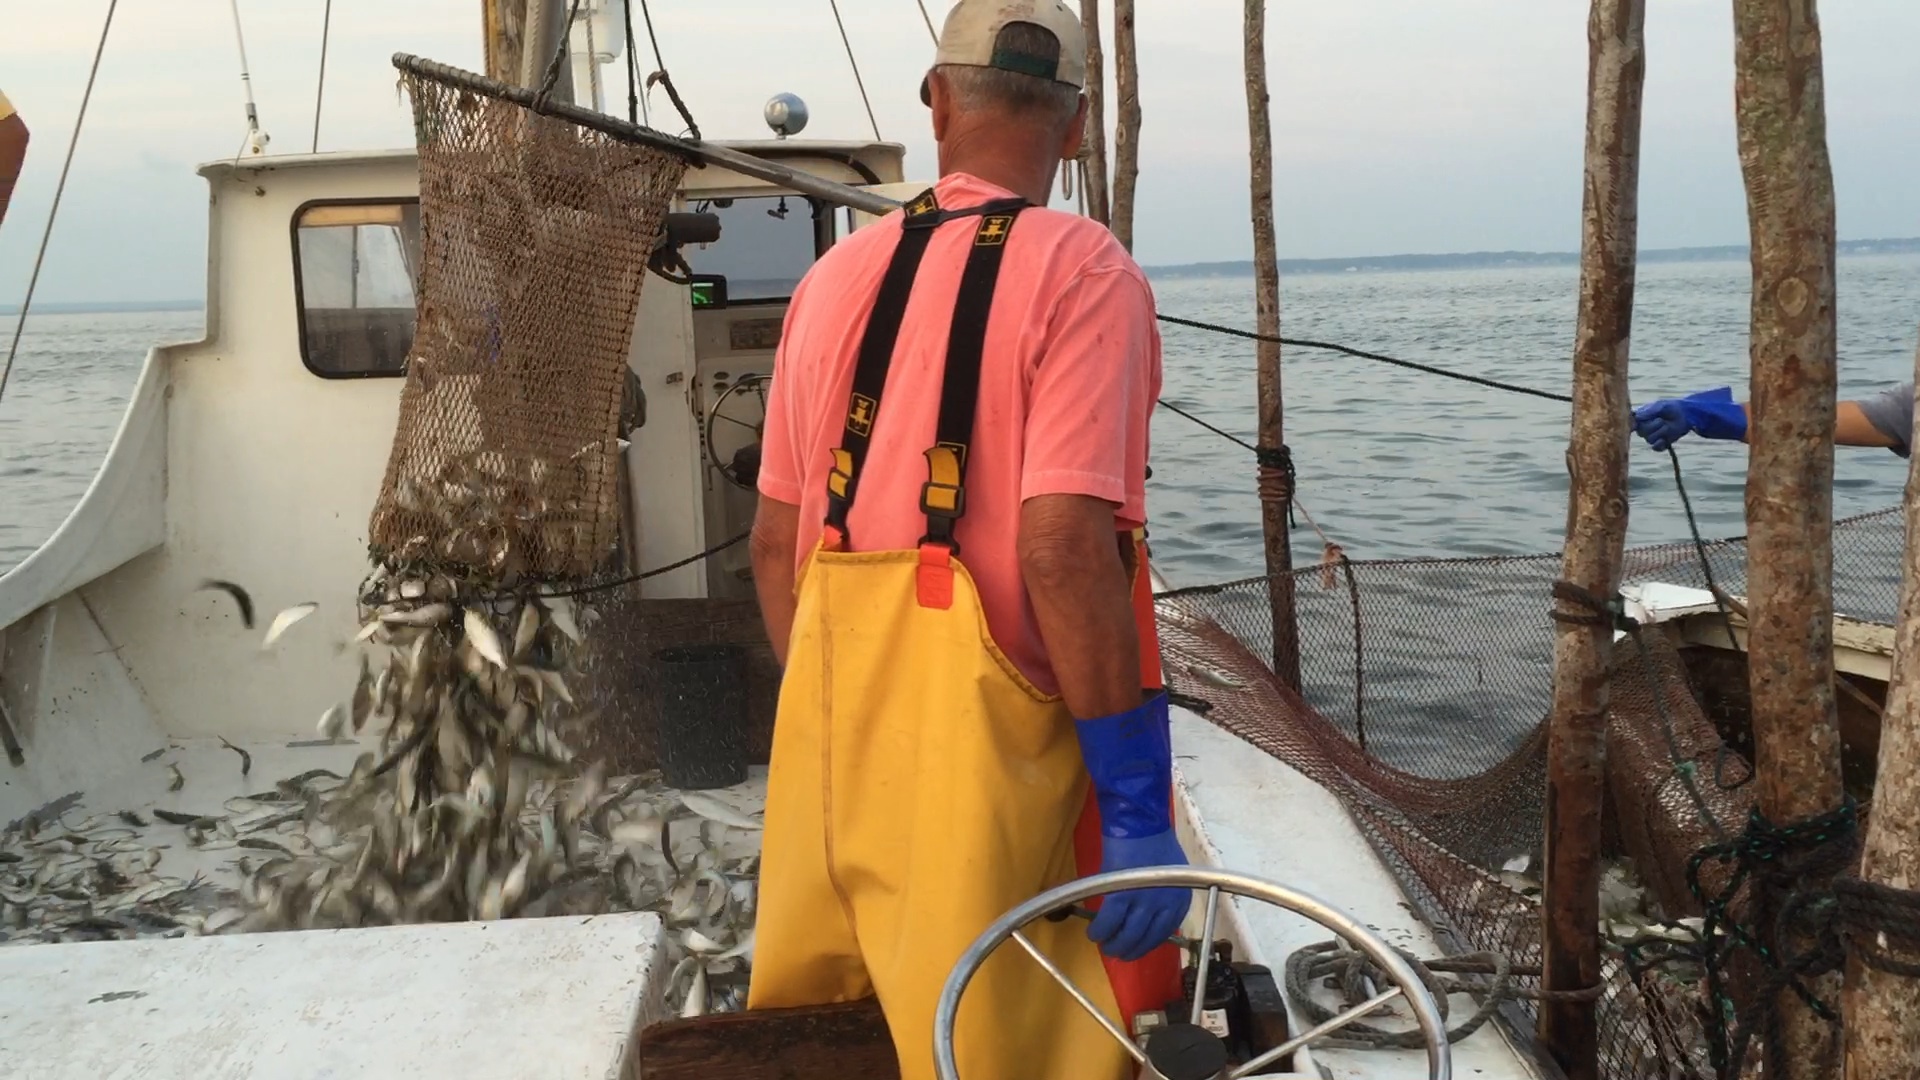 Pound Net Fishing on the Chesapeake « Chesapeake Bay environment